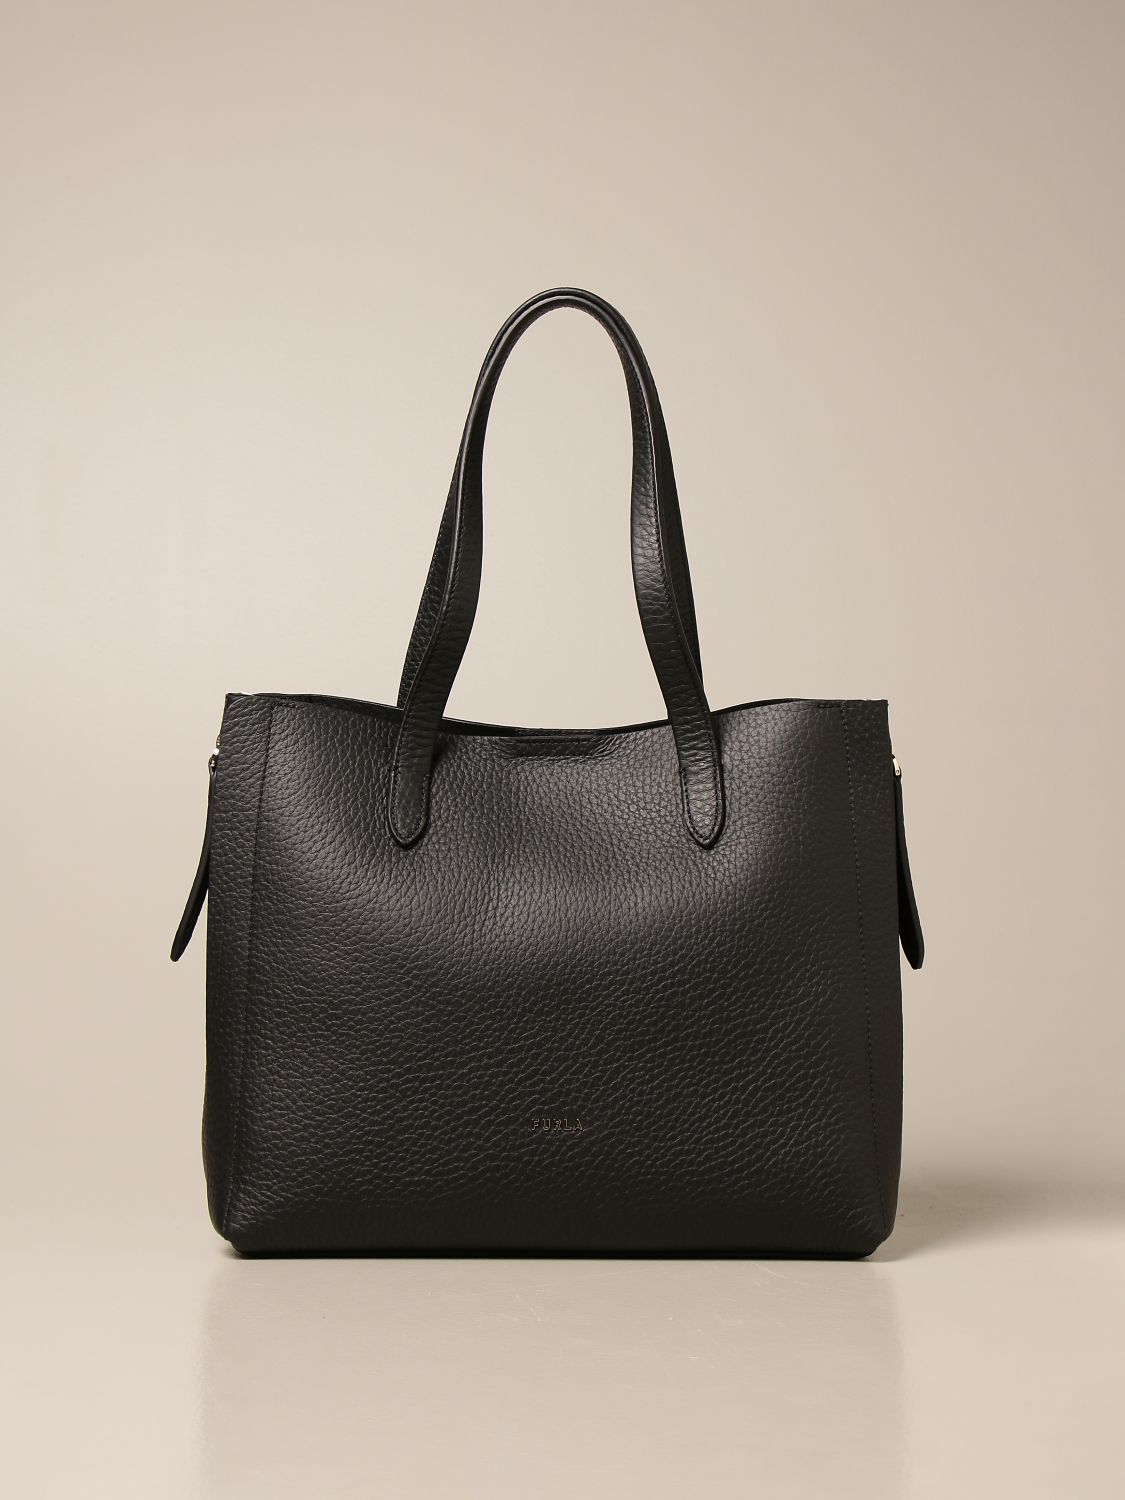 FURLA: Grace bag in hammered leather - Black | Tote Bags Furla WB00173 ...